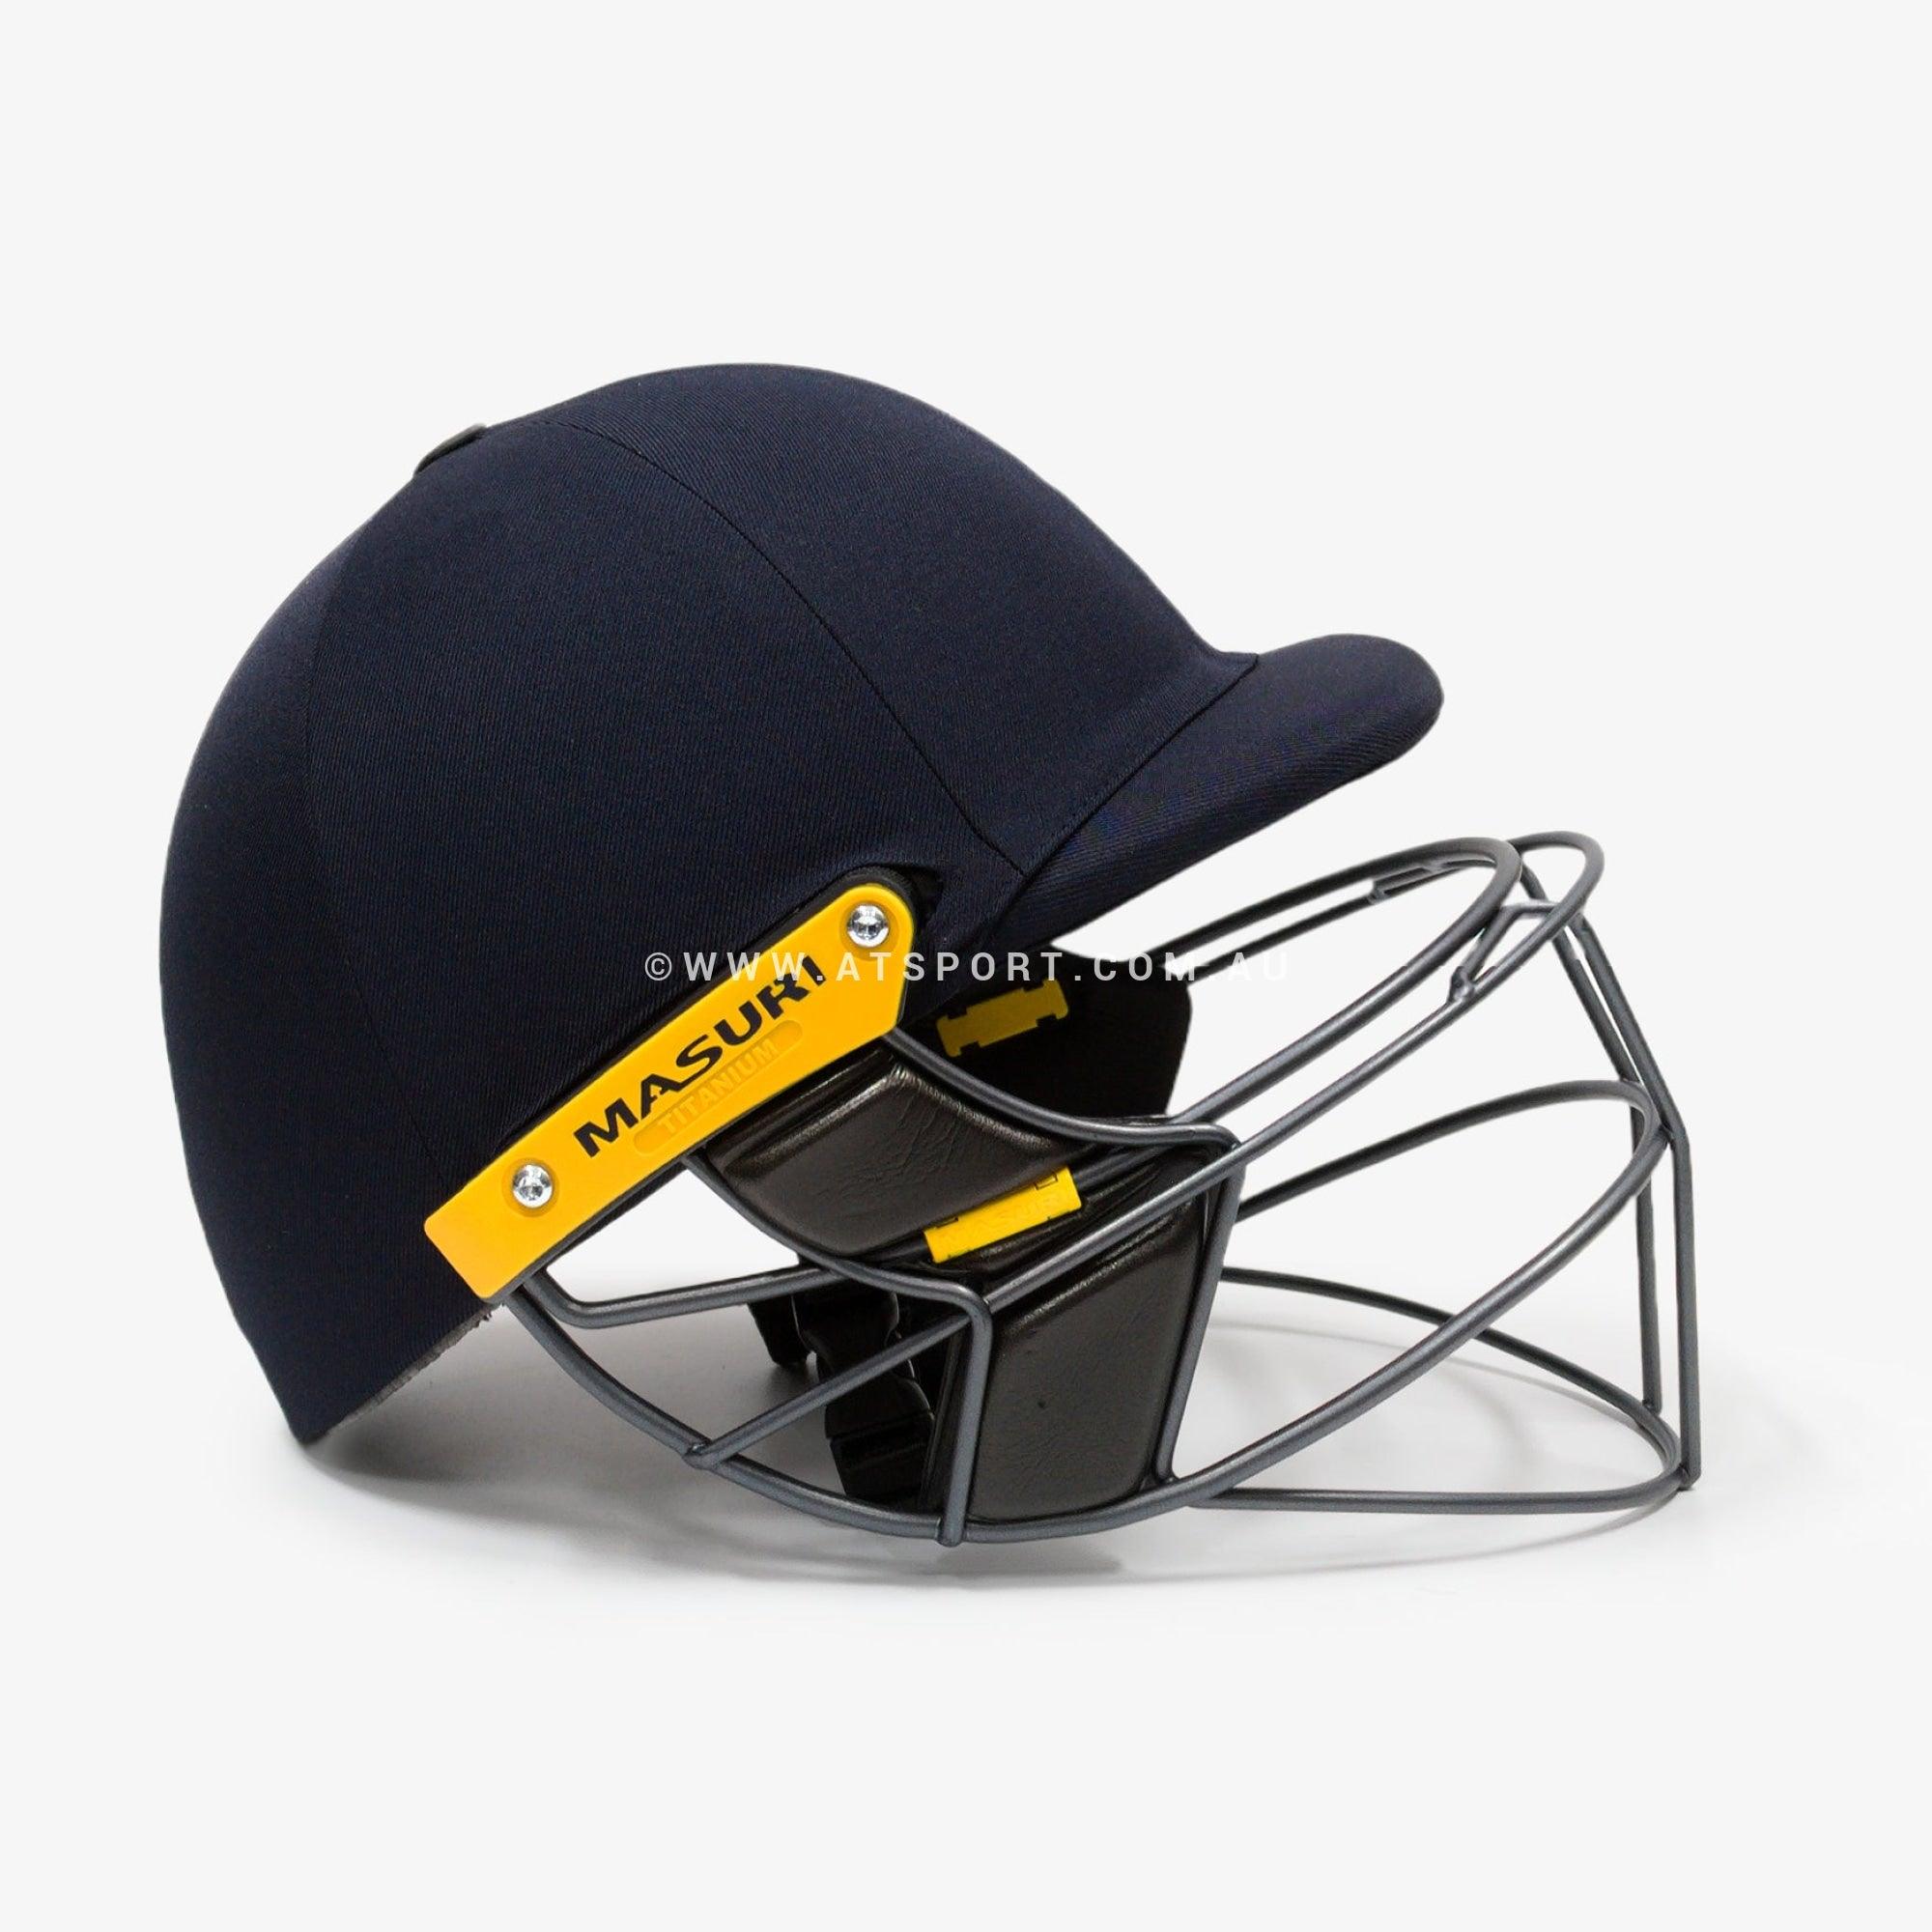 Masuri E LINE TITANIUM Grille Cricket Helmet - AT Sports